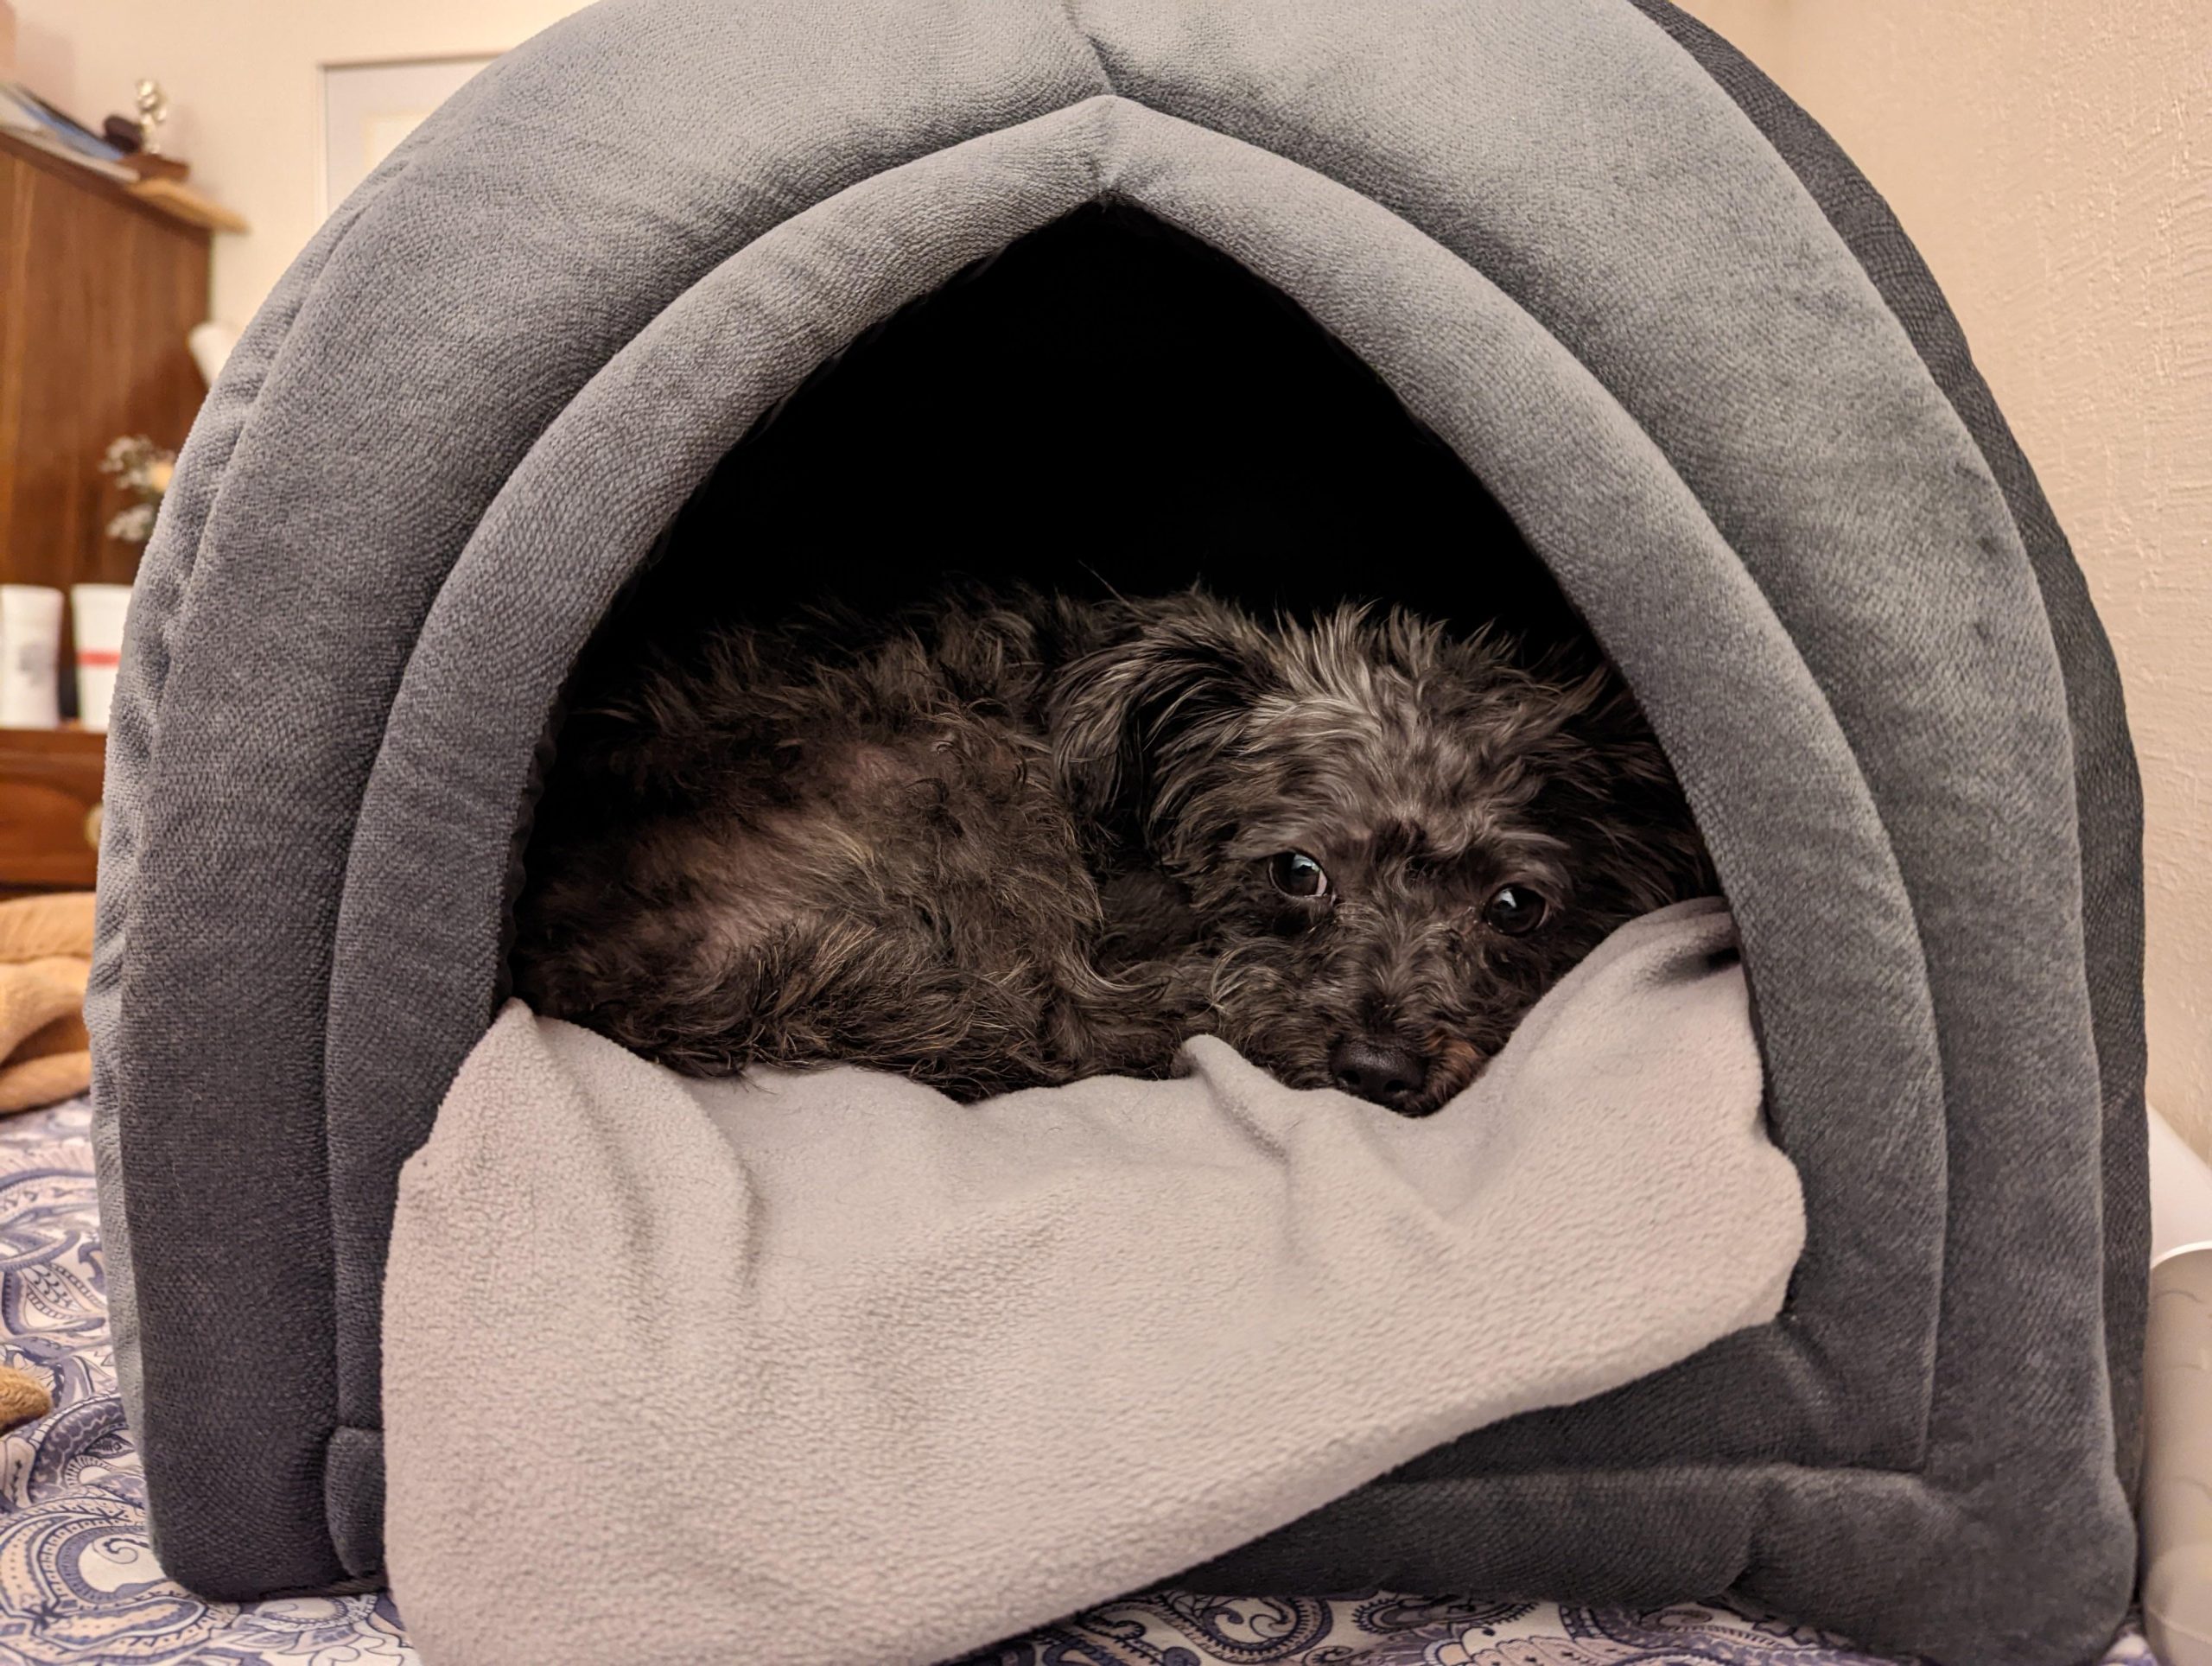 Sleepy Squeak on her heated dog mattress.